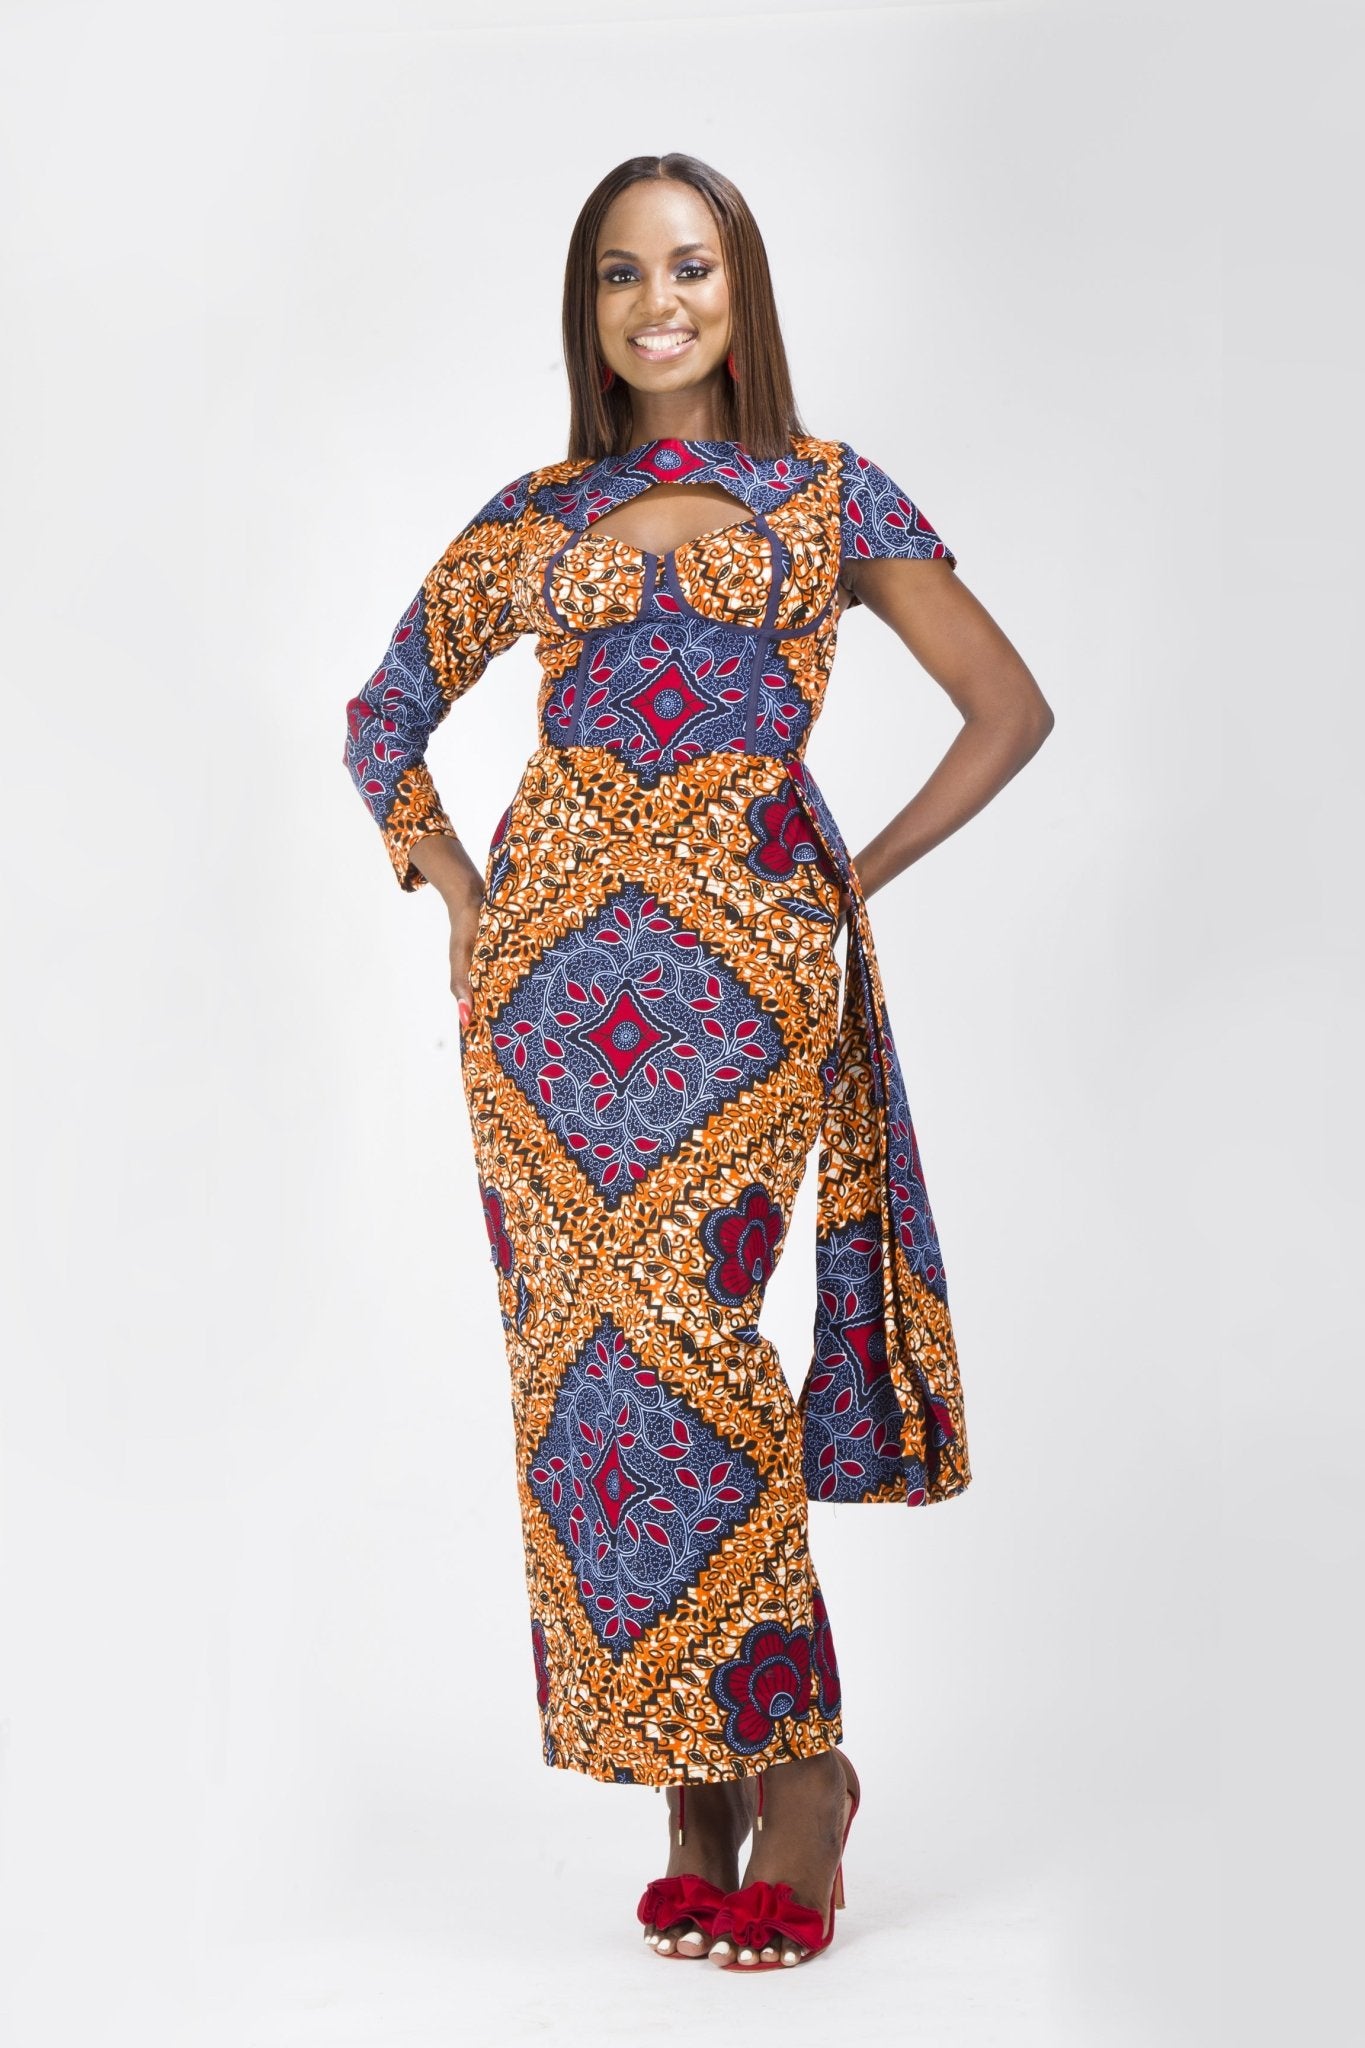 BROWN BLUE AFRICAN ANKARA PRINT PLUS SIZE CLOTHING PARTY DRESS - Africanclothinghub UK, US, Canada